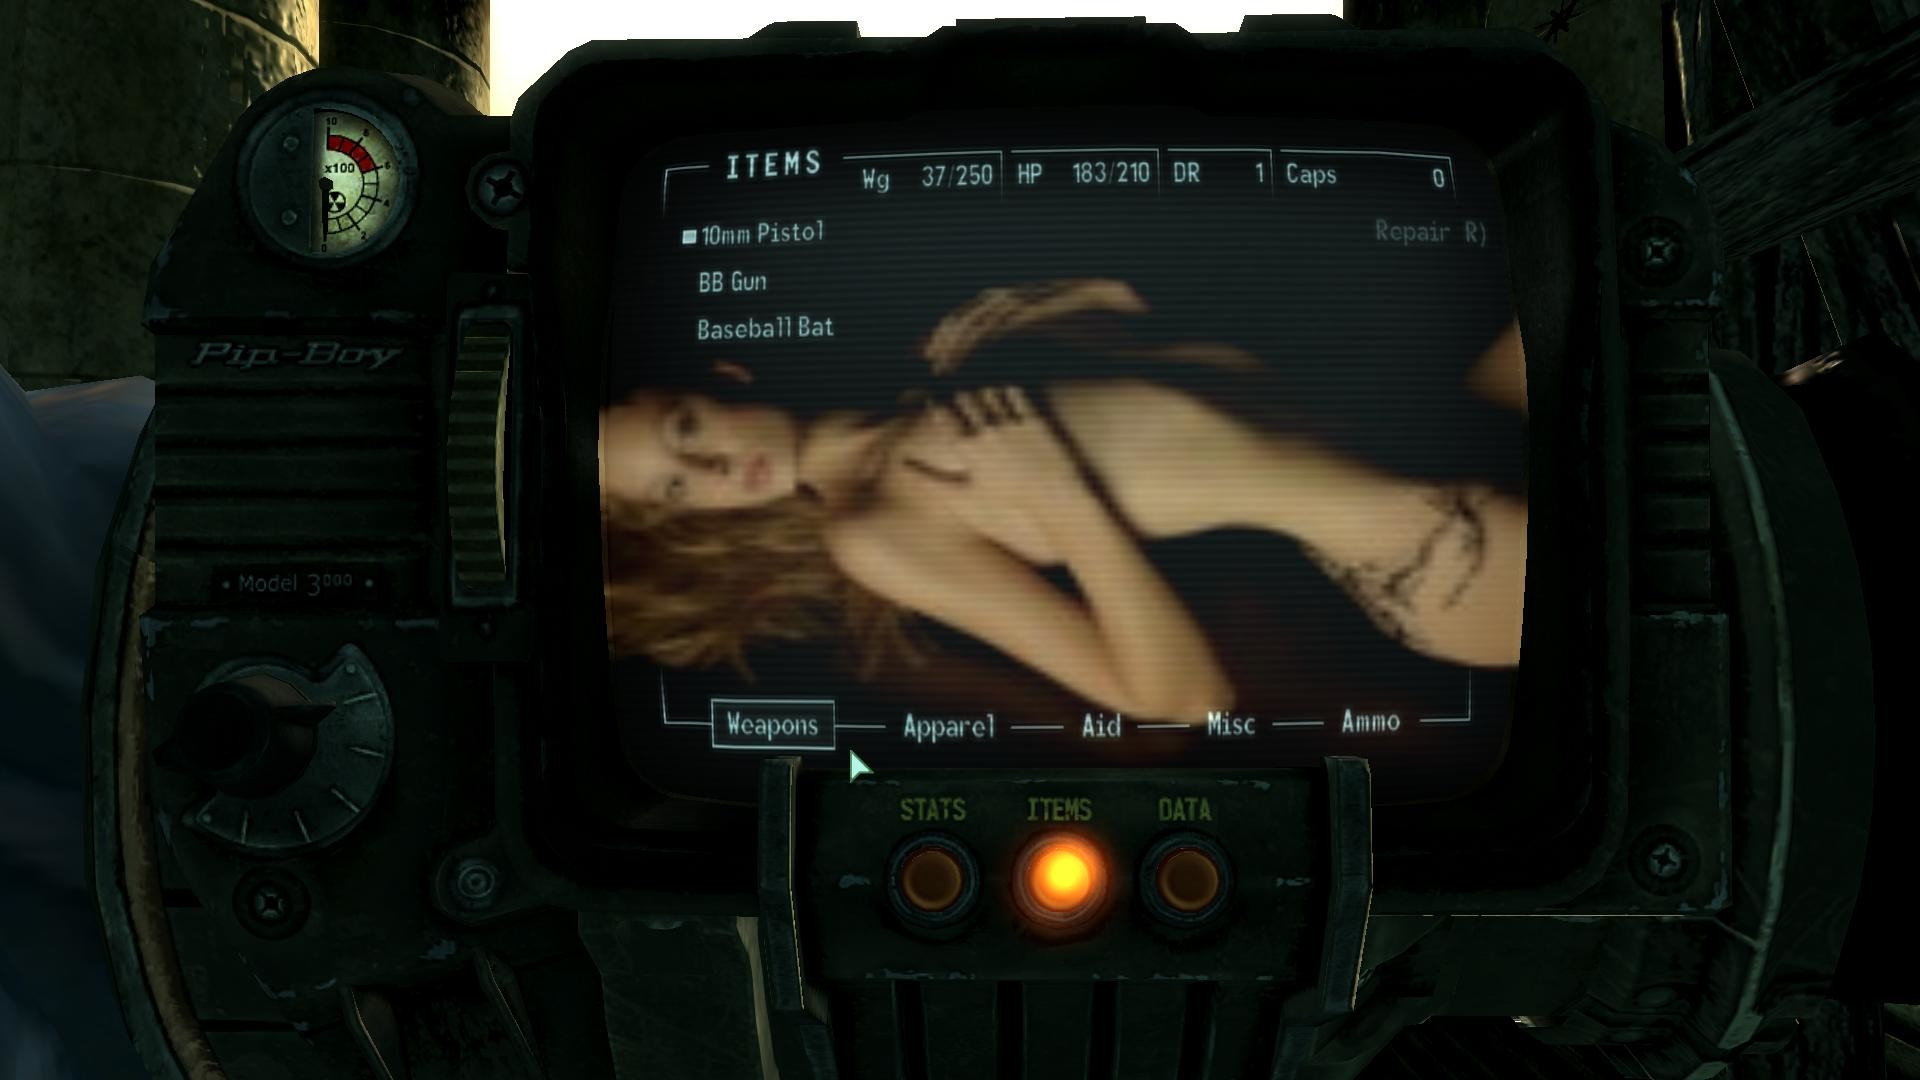 1920x1080 Rachel Nichols Pipboy backround pic at Fallout3 Nexus - mods and community